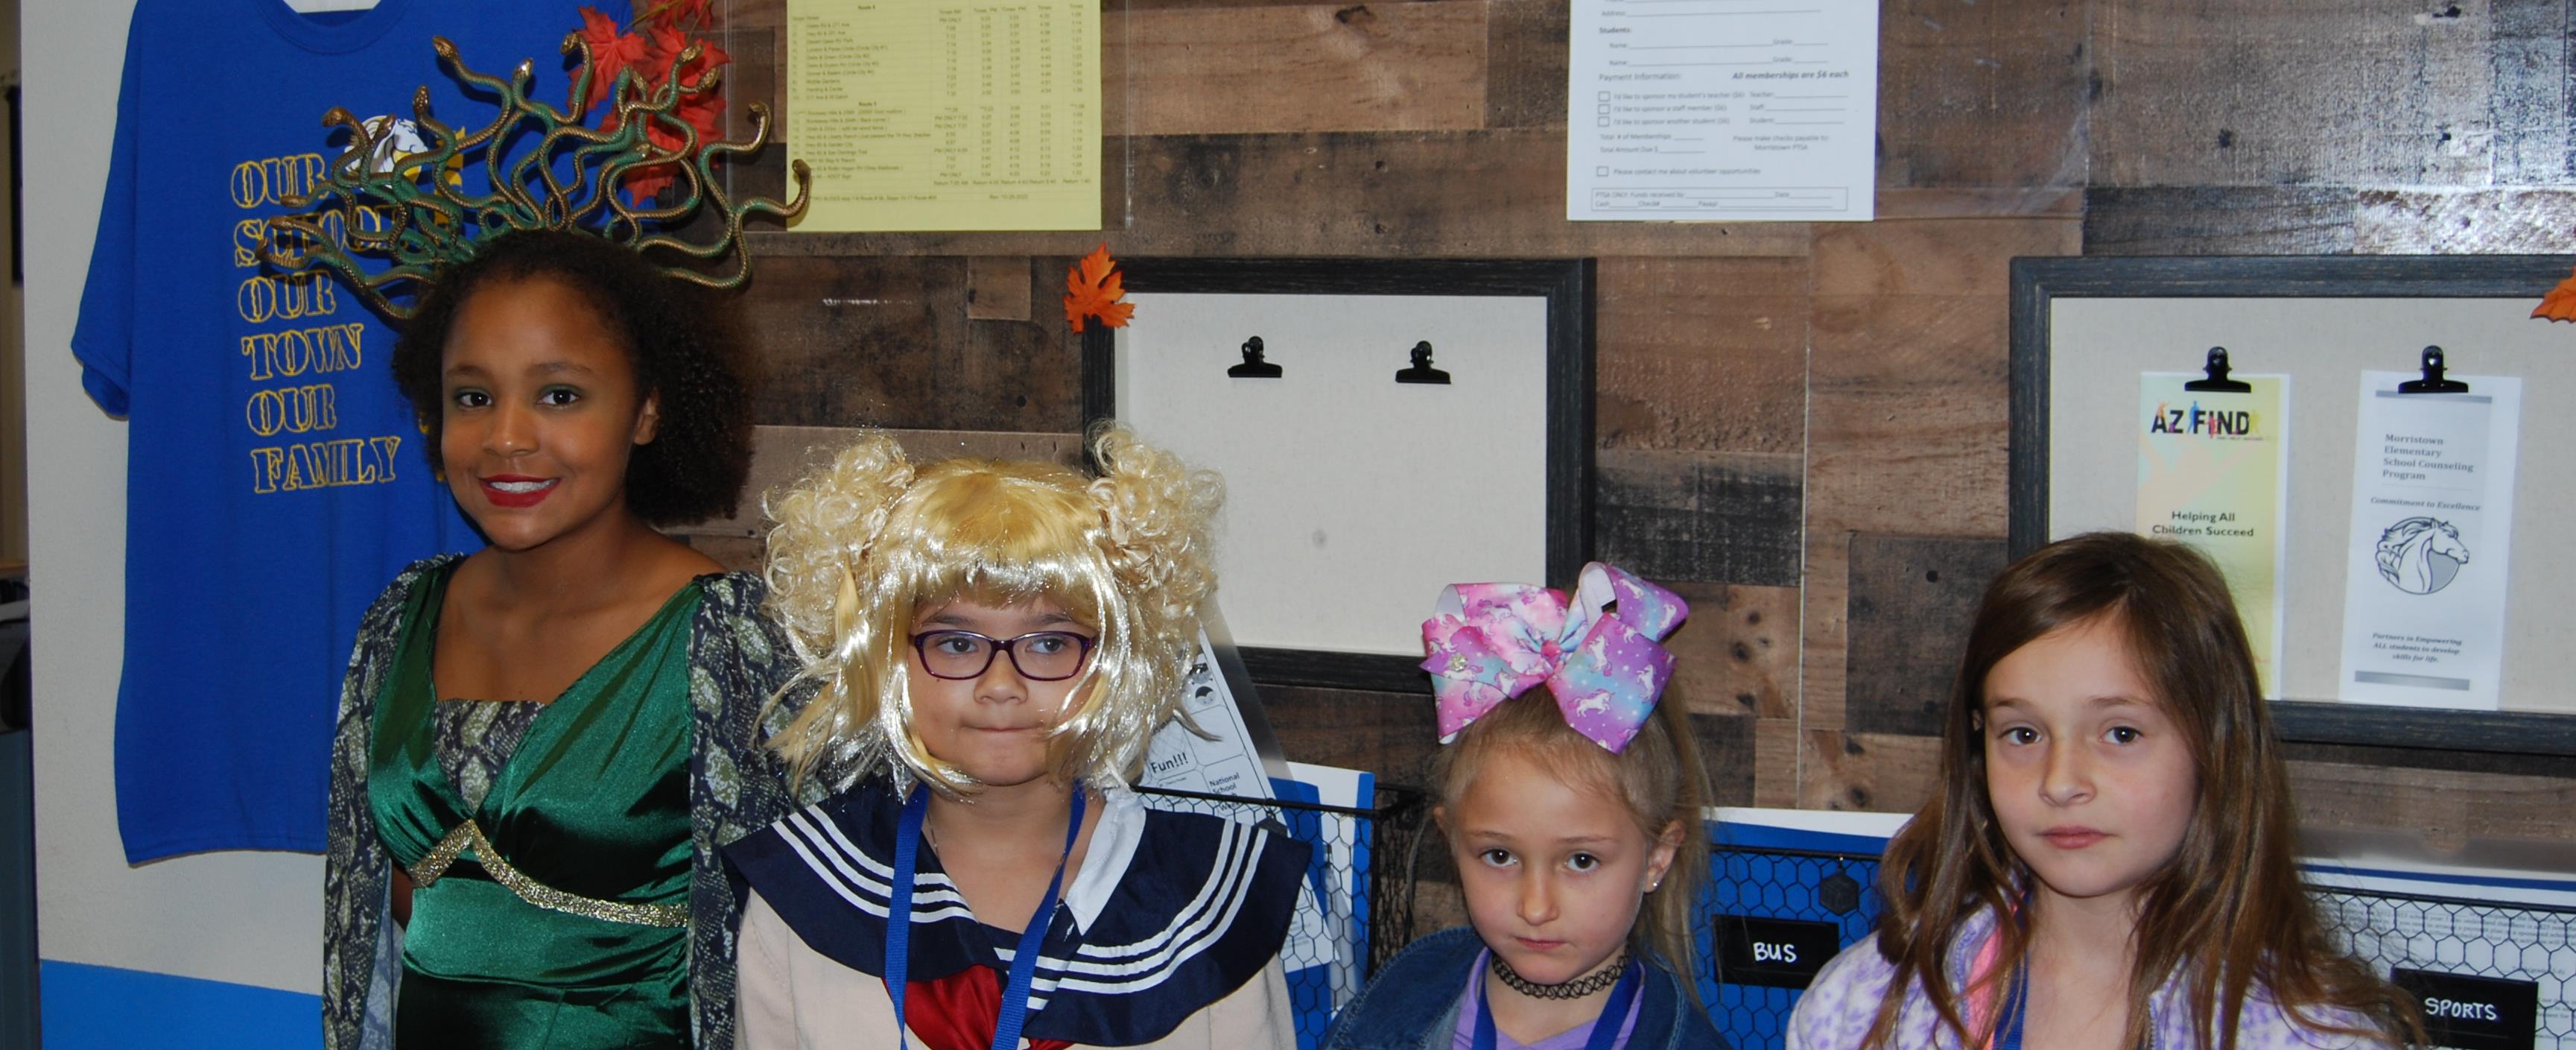 Children dressed up in Halloween costumes